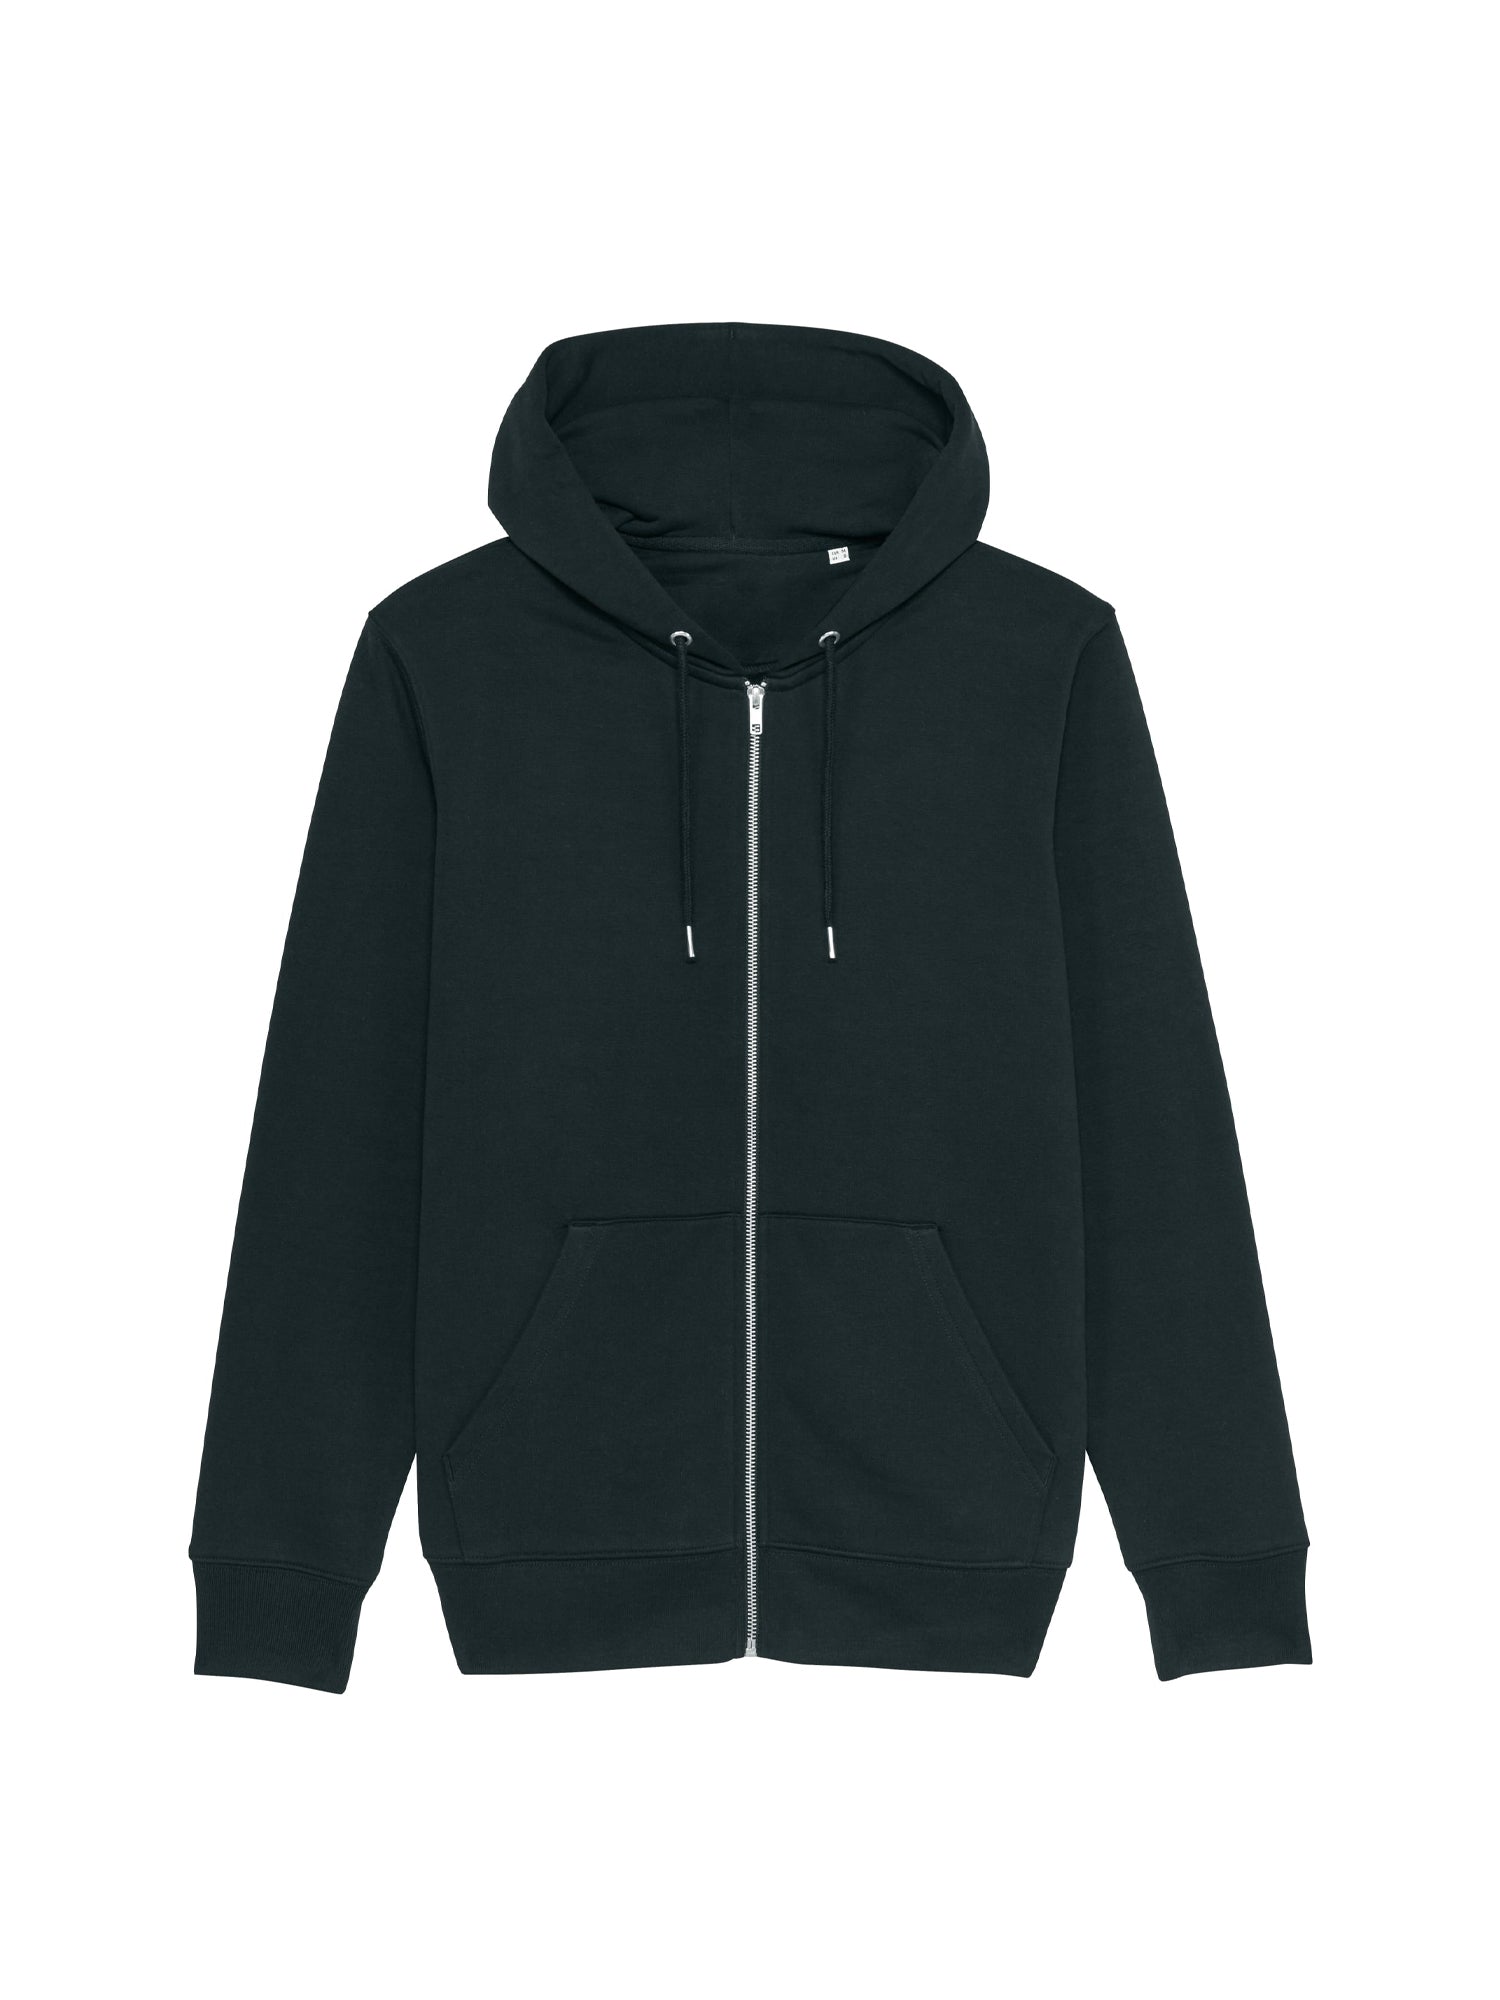 stanley stella organic zip up hoodie stsm566 portait black front flat lay